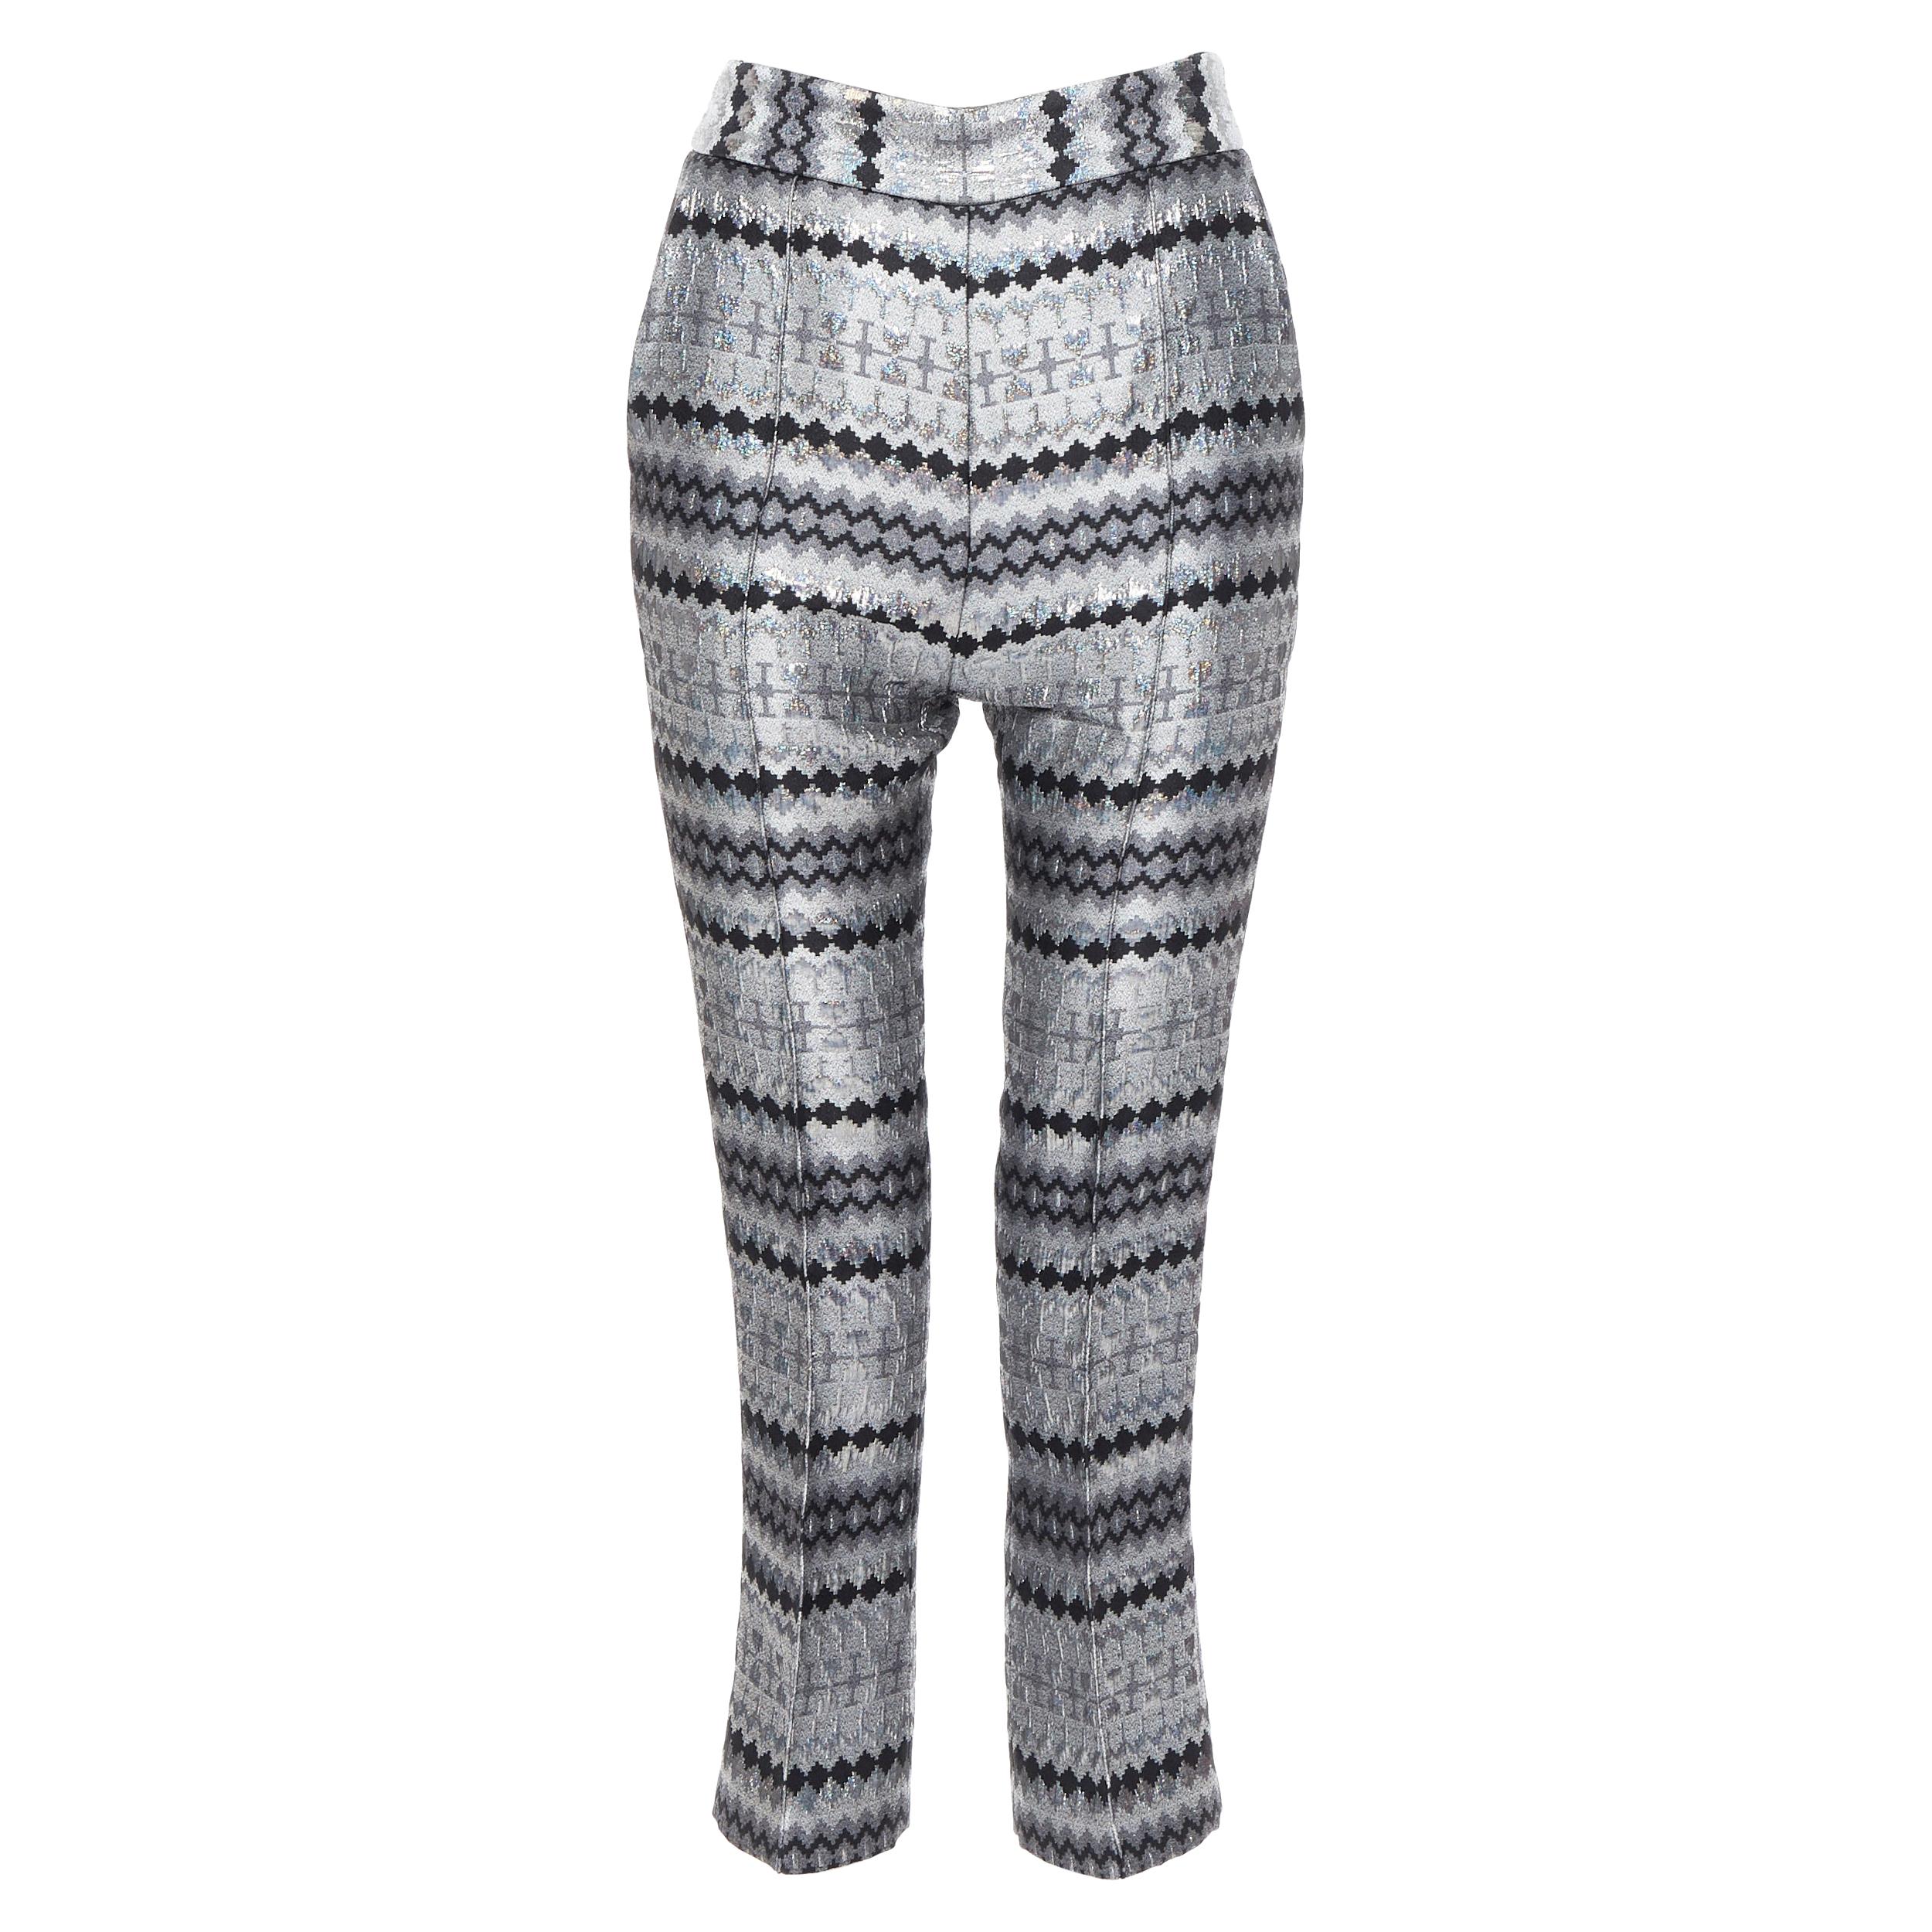 MATICEVSKI 2016 Fractured Pants silver lurex geometric jacquard crop pants 26"